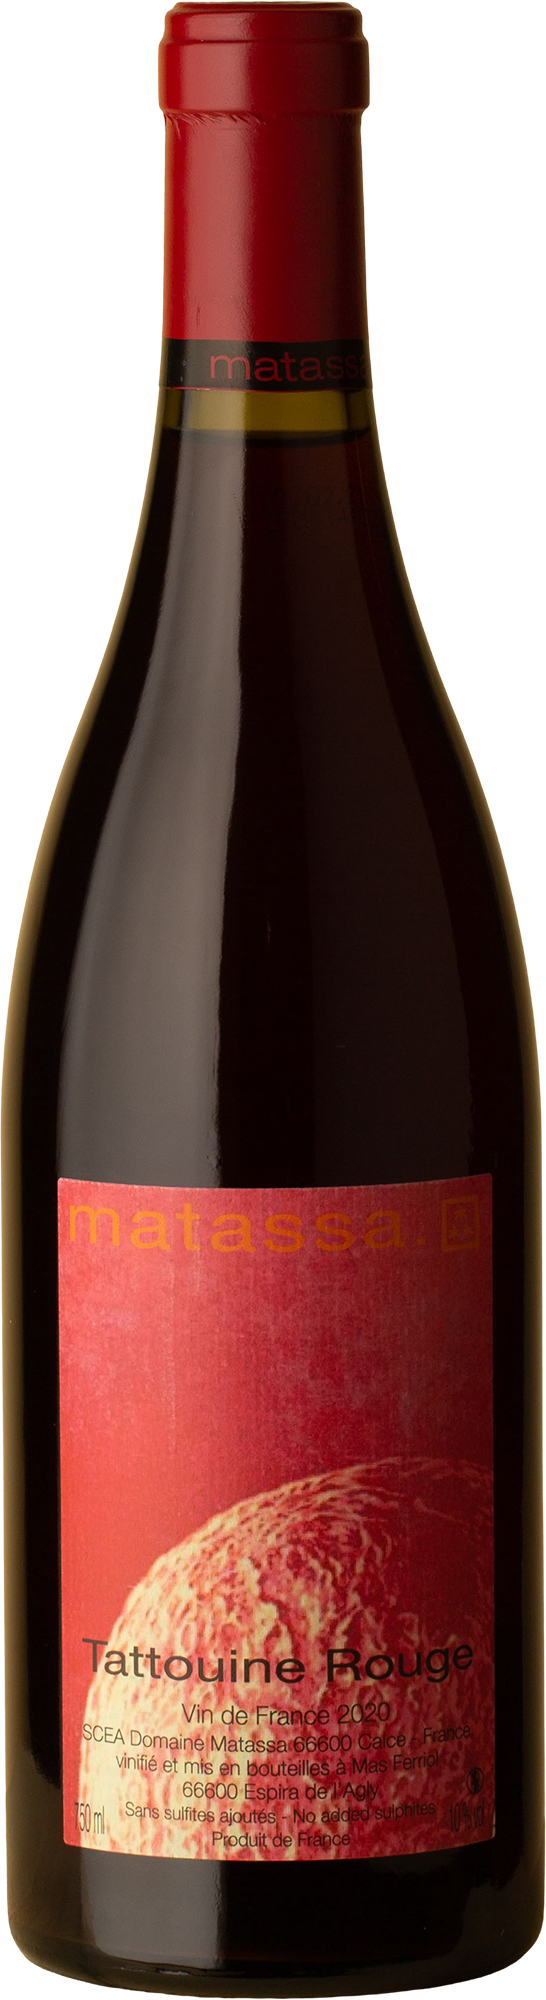 Matassa - Tattouine Grenache Noir / Grenache Blanc 2020 Red Wine